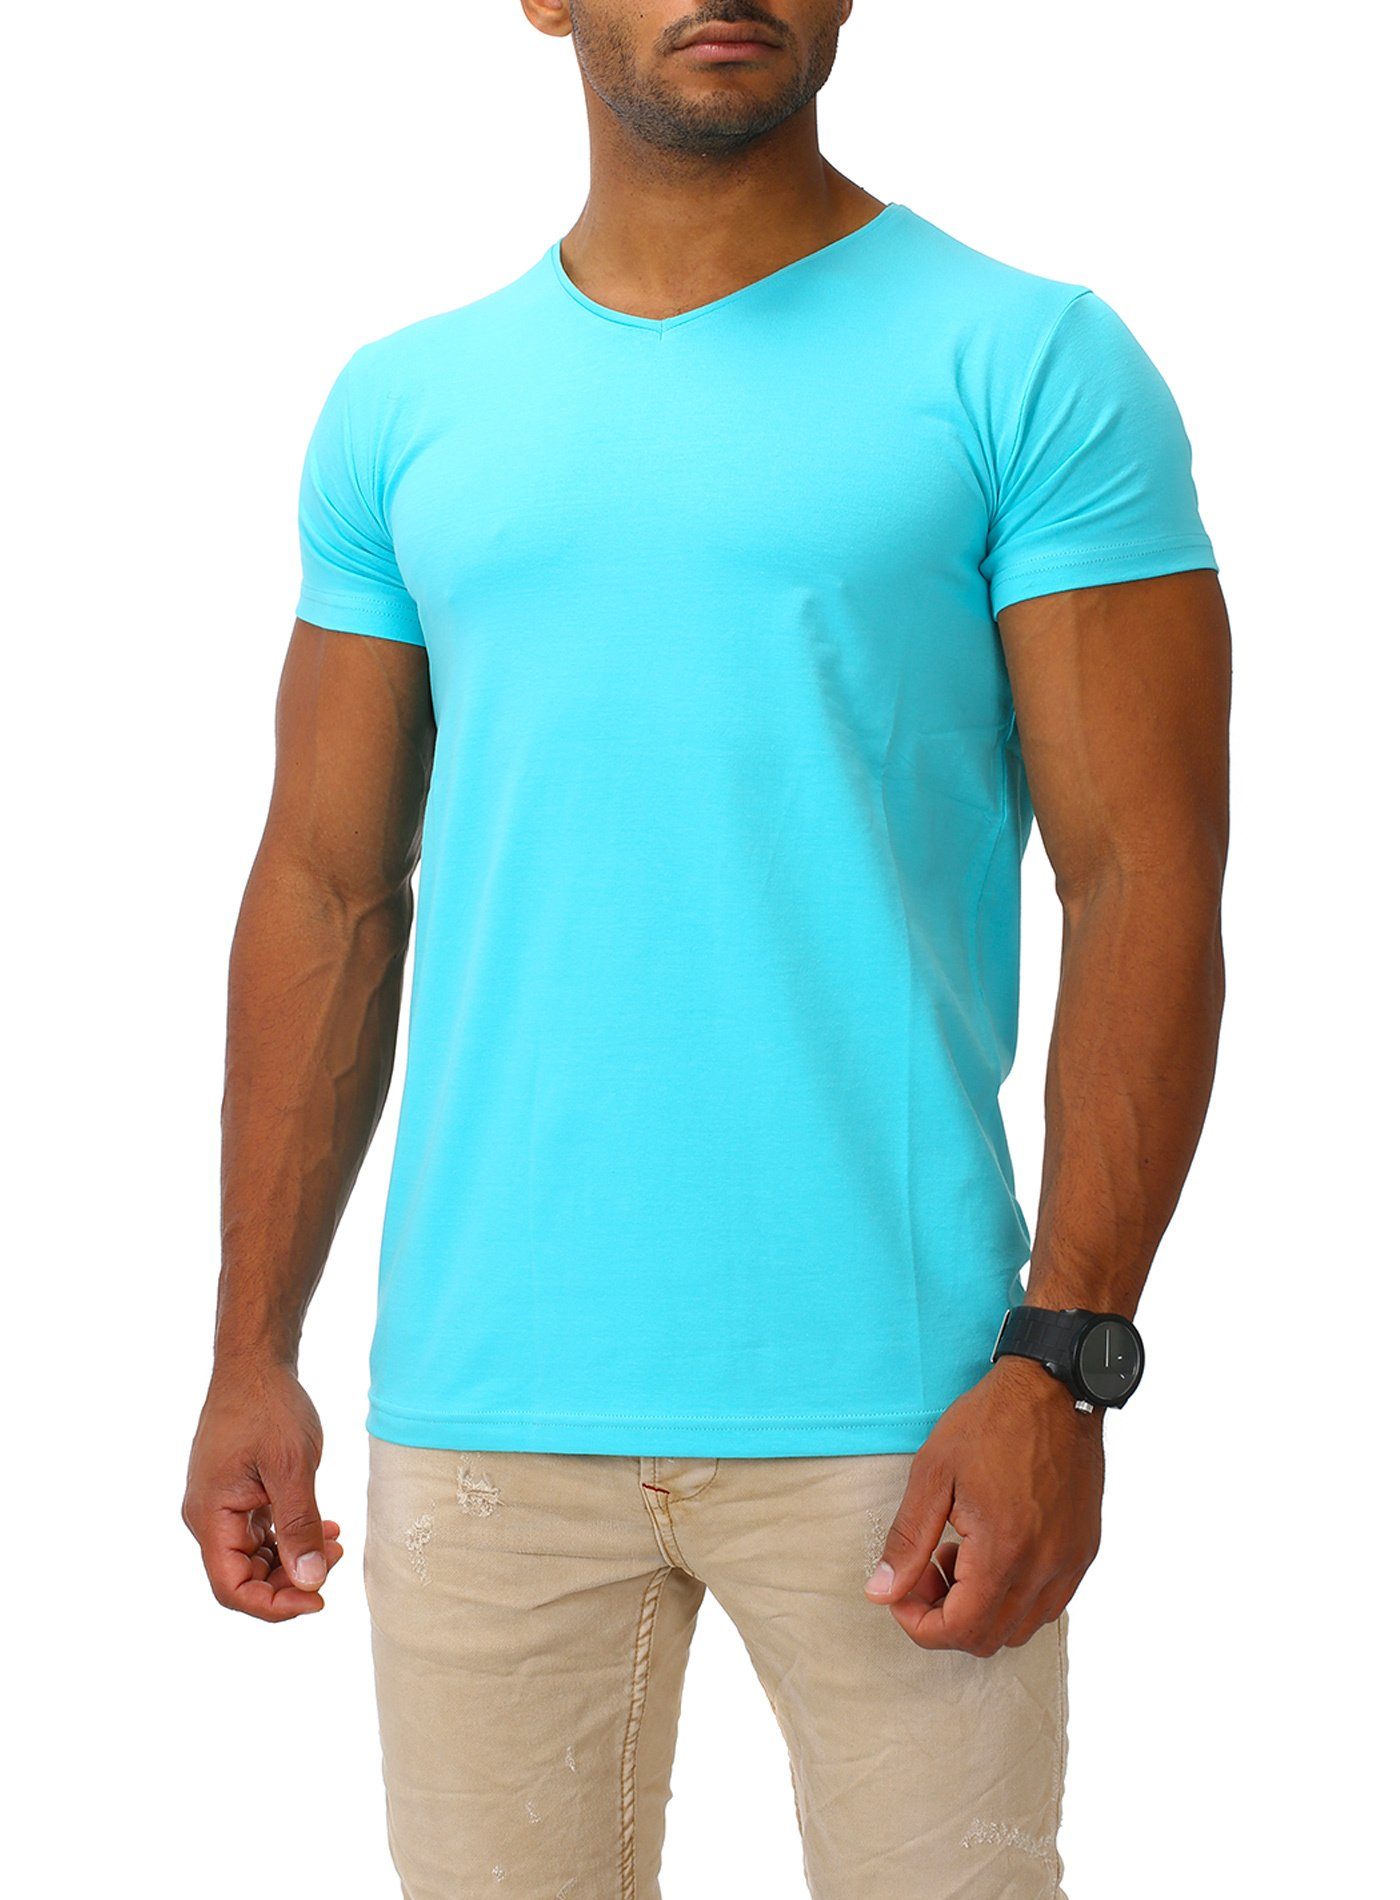 Joe Franks T-Shirt HIGH mit hohem V-Ausschnitt turquoise